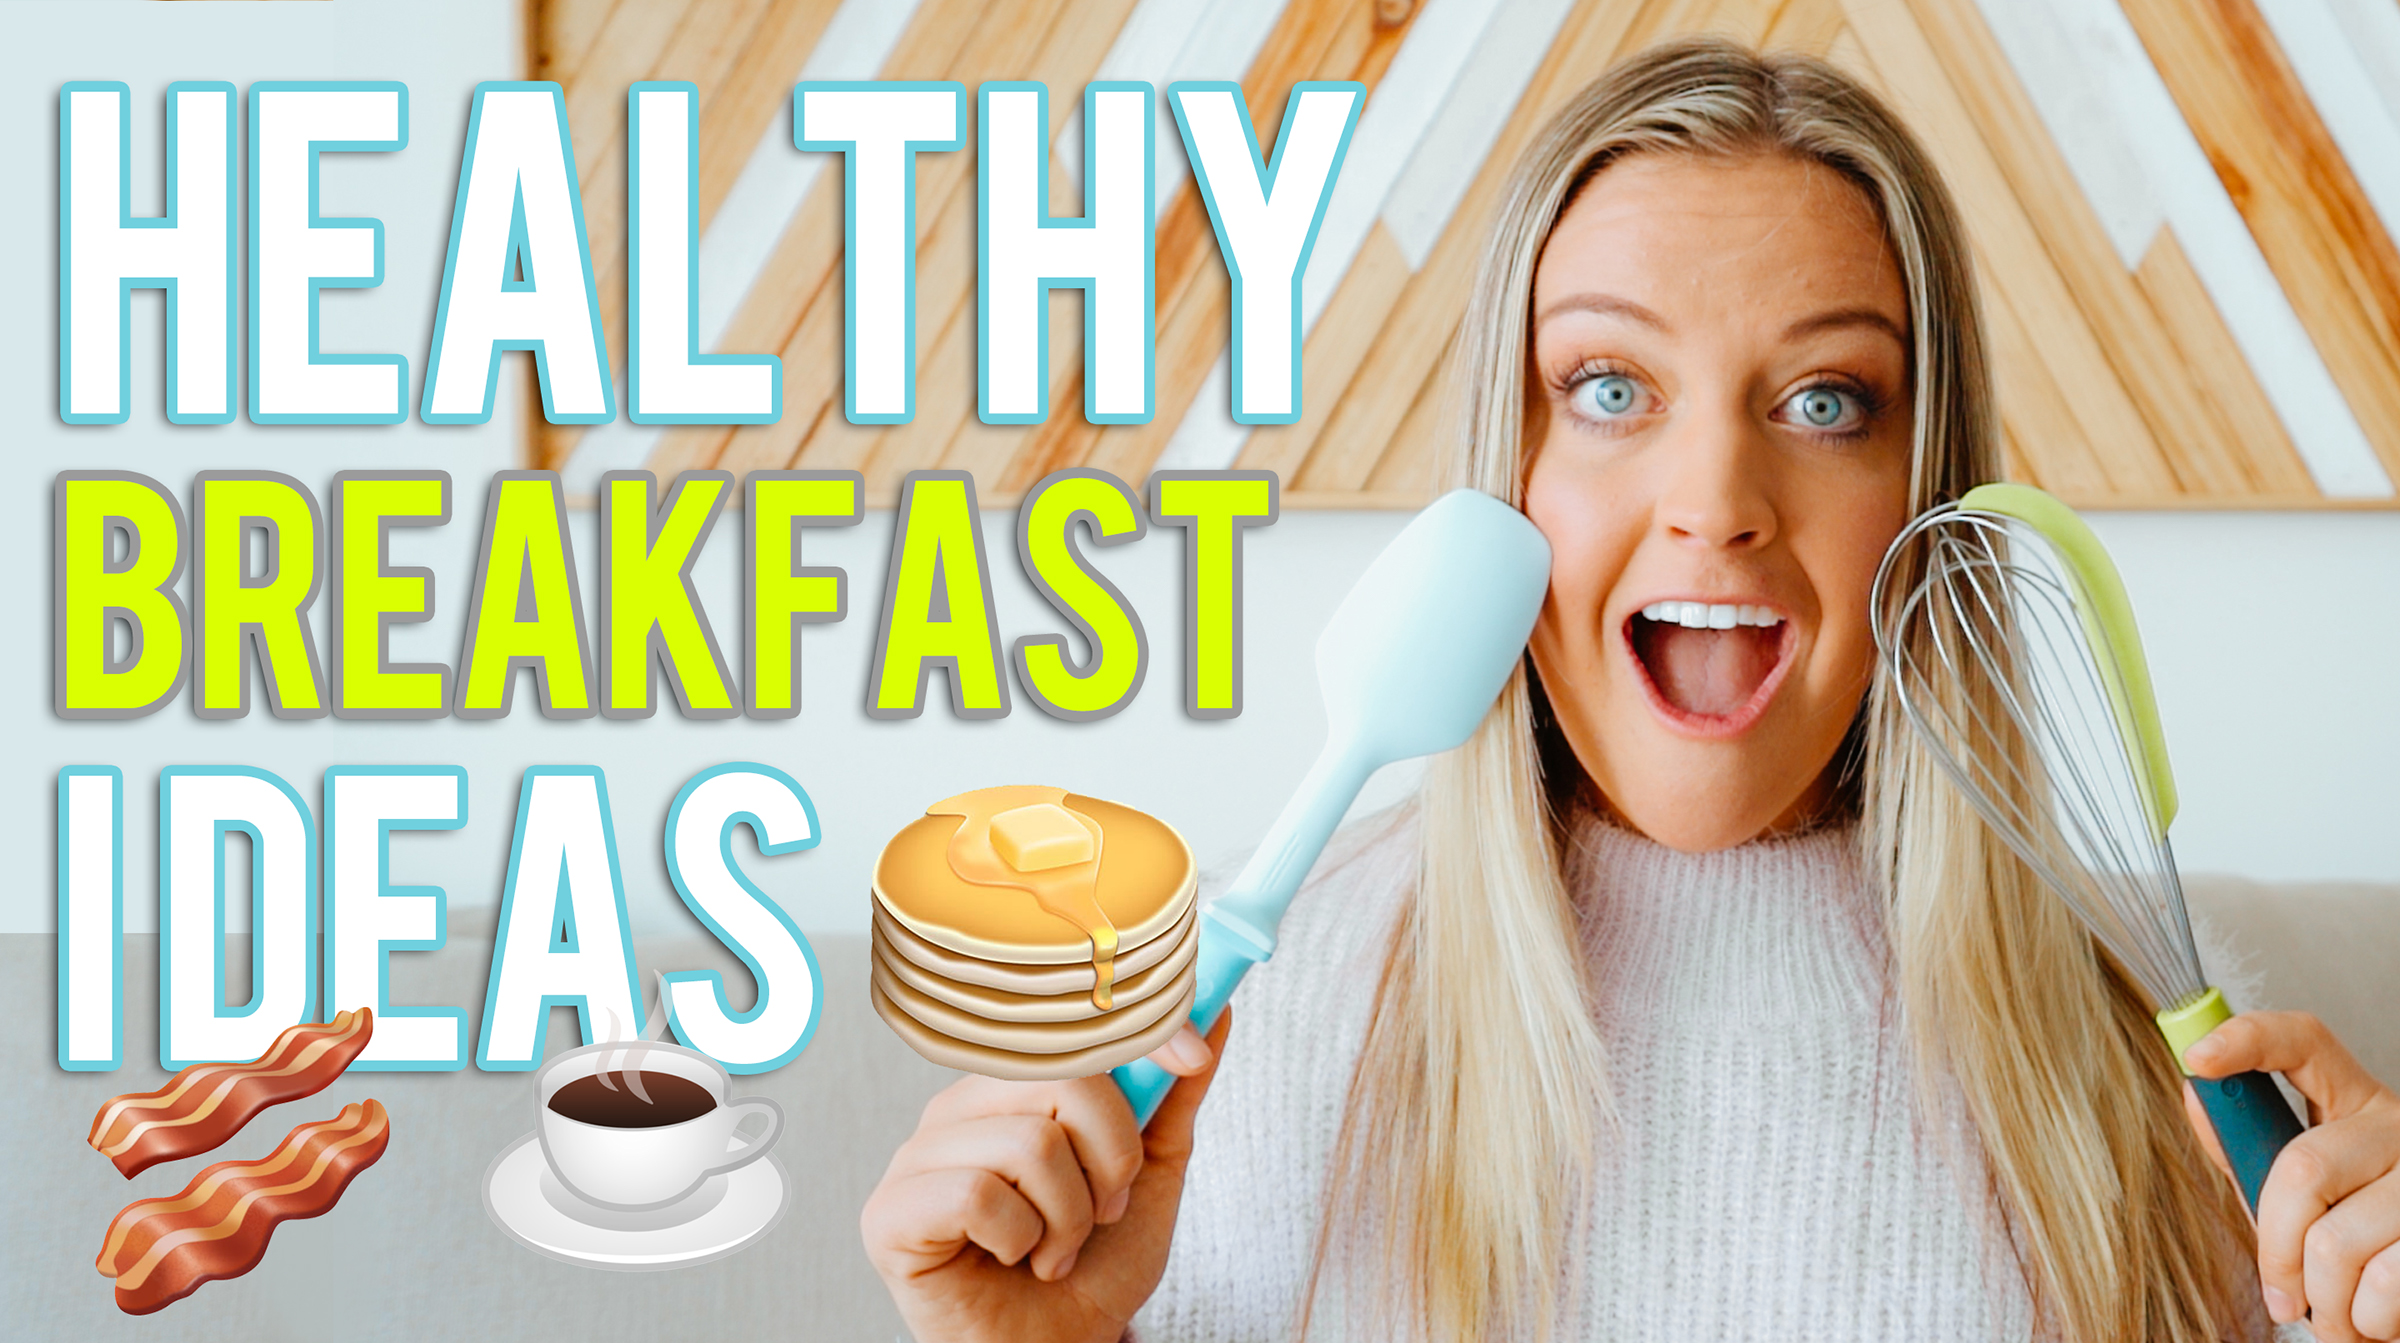 10 Healthy Breakfast Recipes